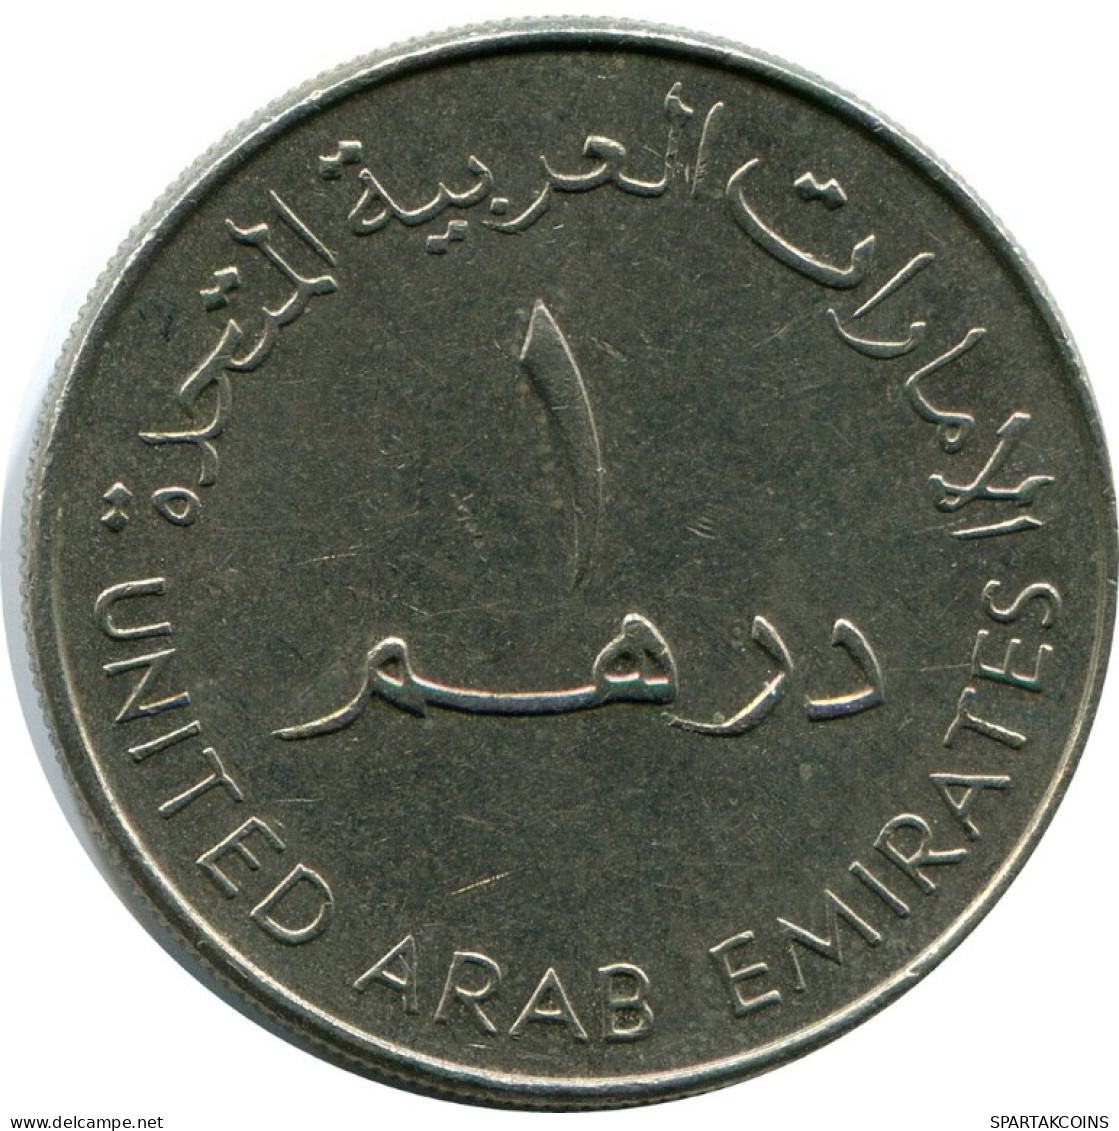 1 DIRHAM 2000 UAE UNITED ARAB EMIRATES Islamic Coin #AH998.U.A - Verenigde Arabische Emiraten